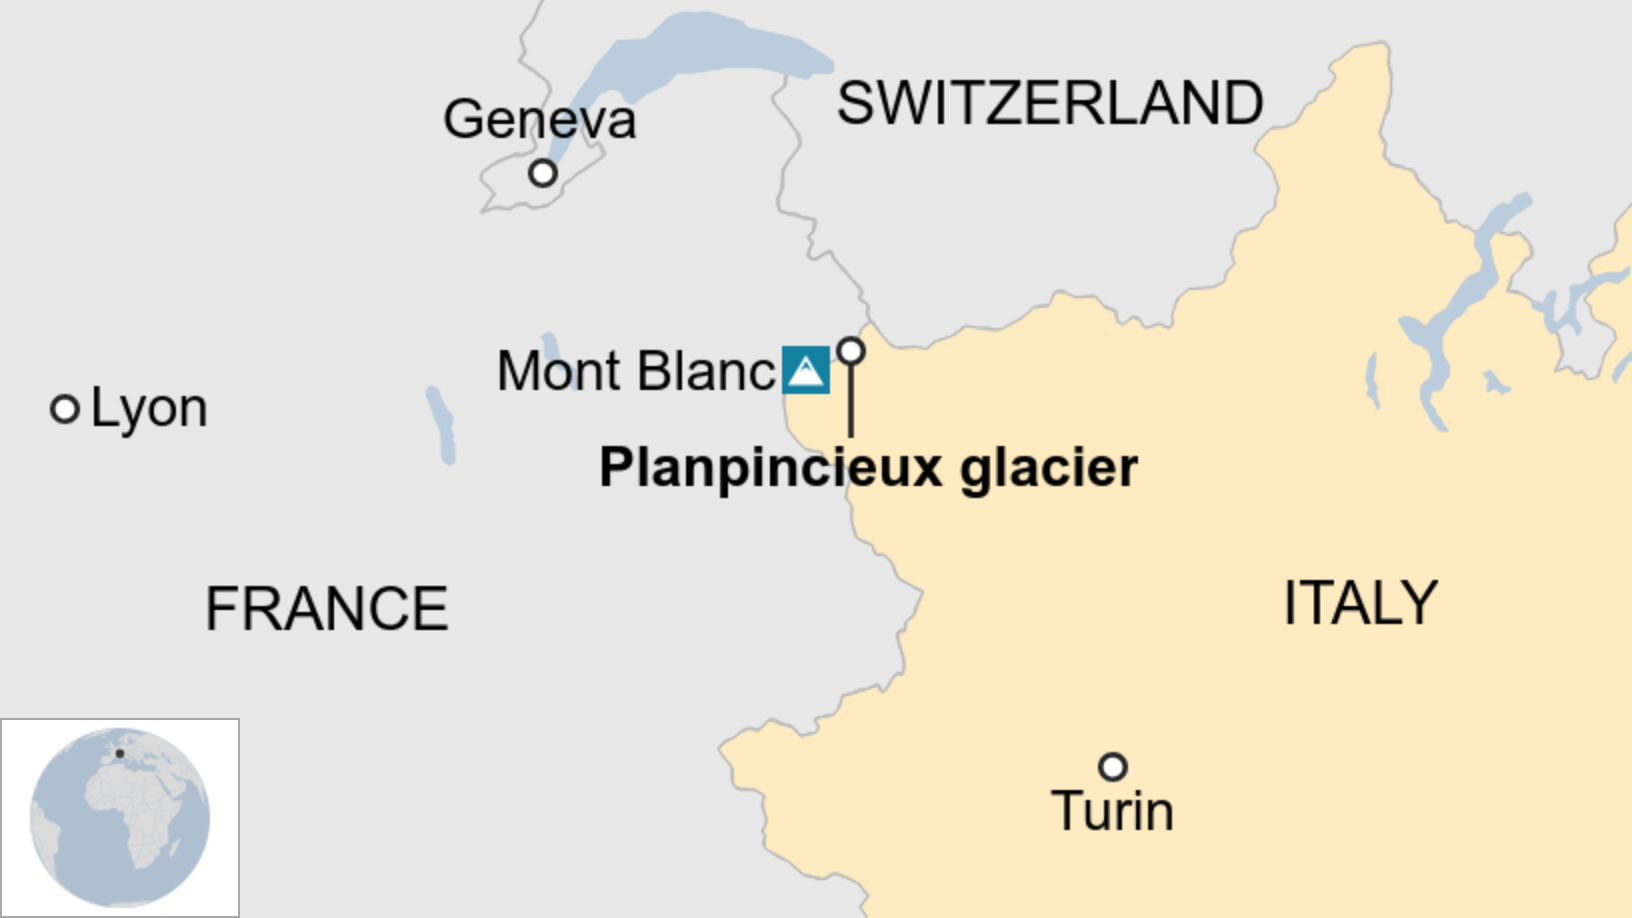 The location of the Planpincieux glacier on the Grandes Jorasses peak, Mont Blanc